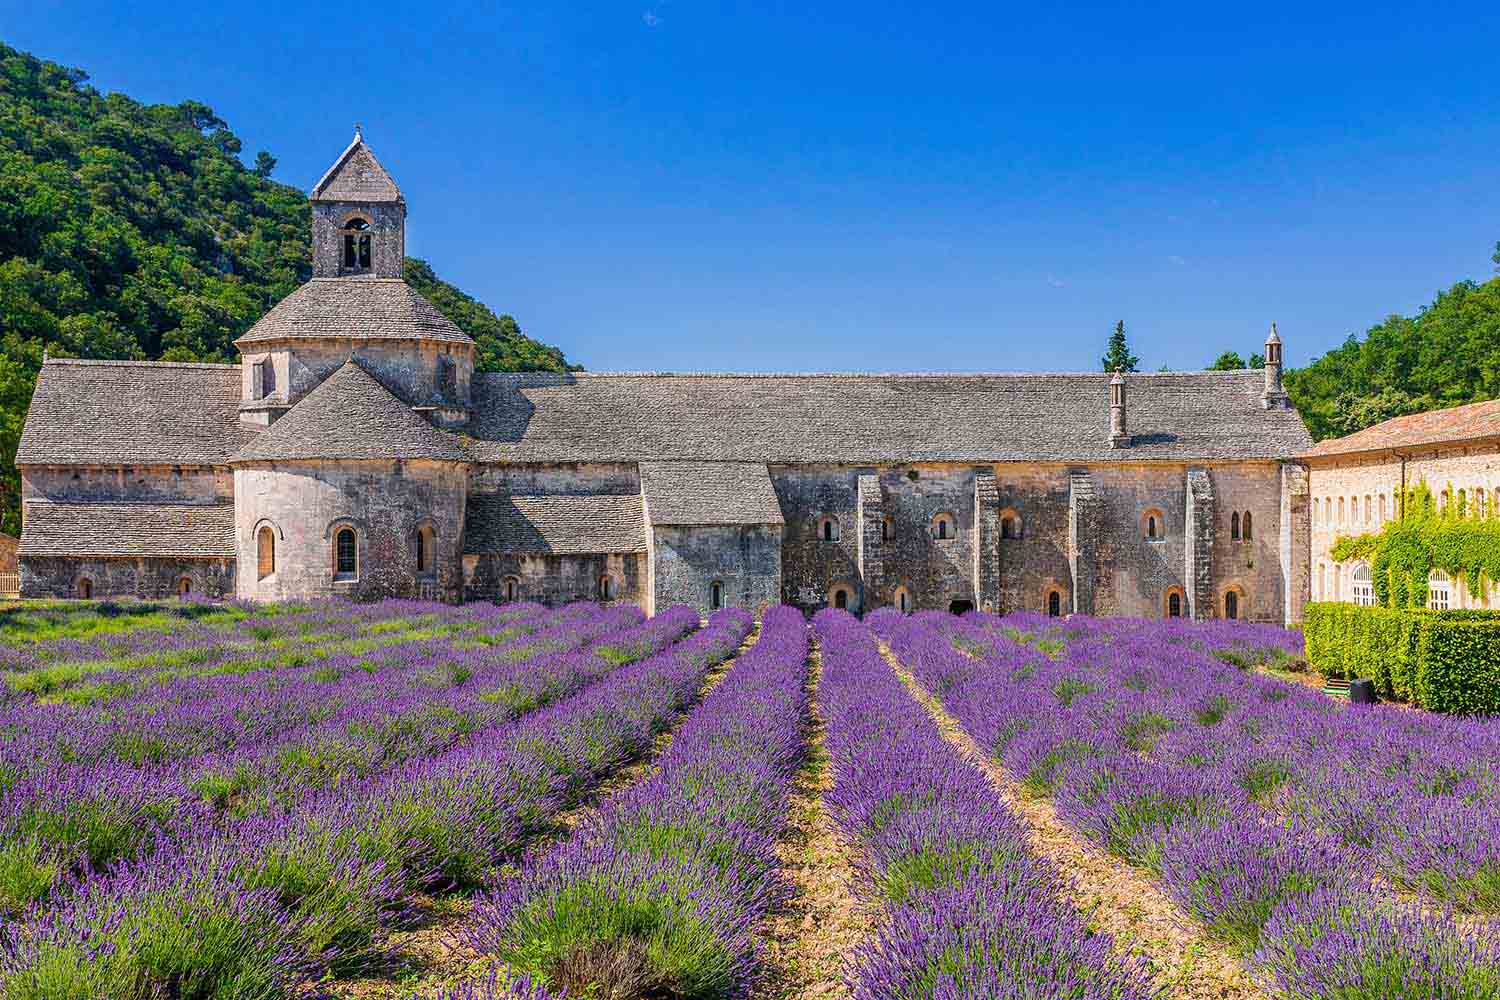 Bright purple lavender field before a monastery